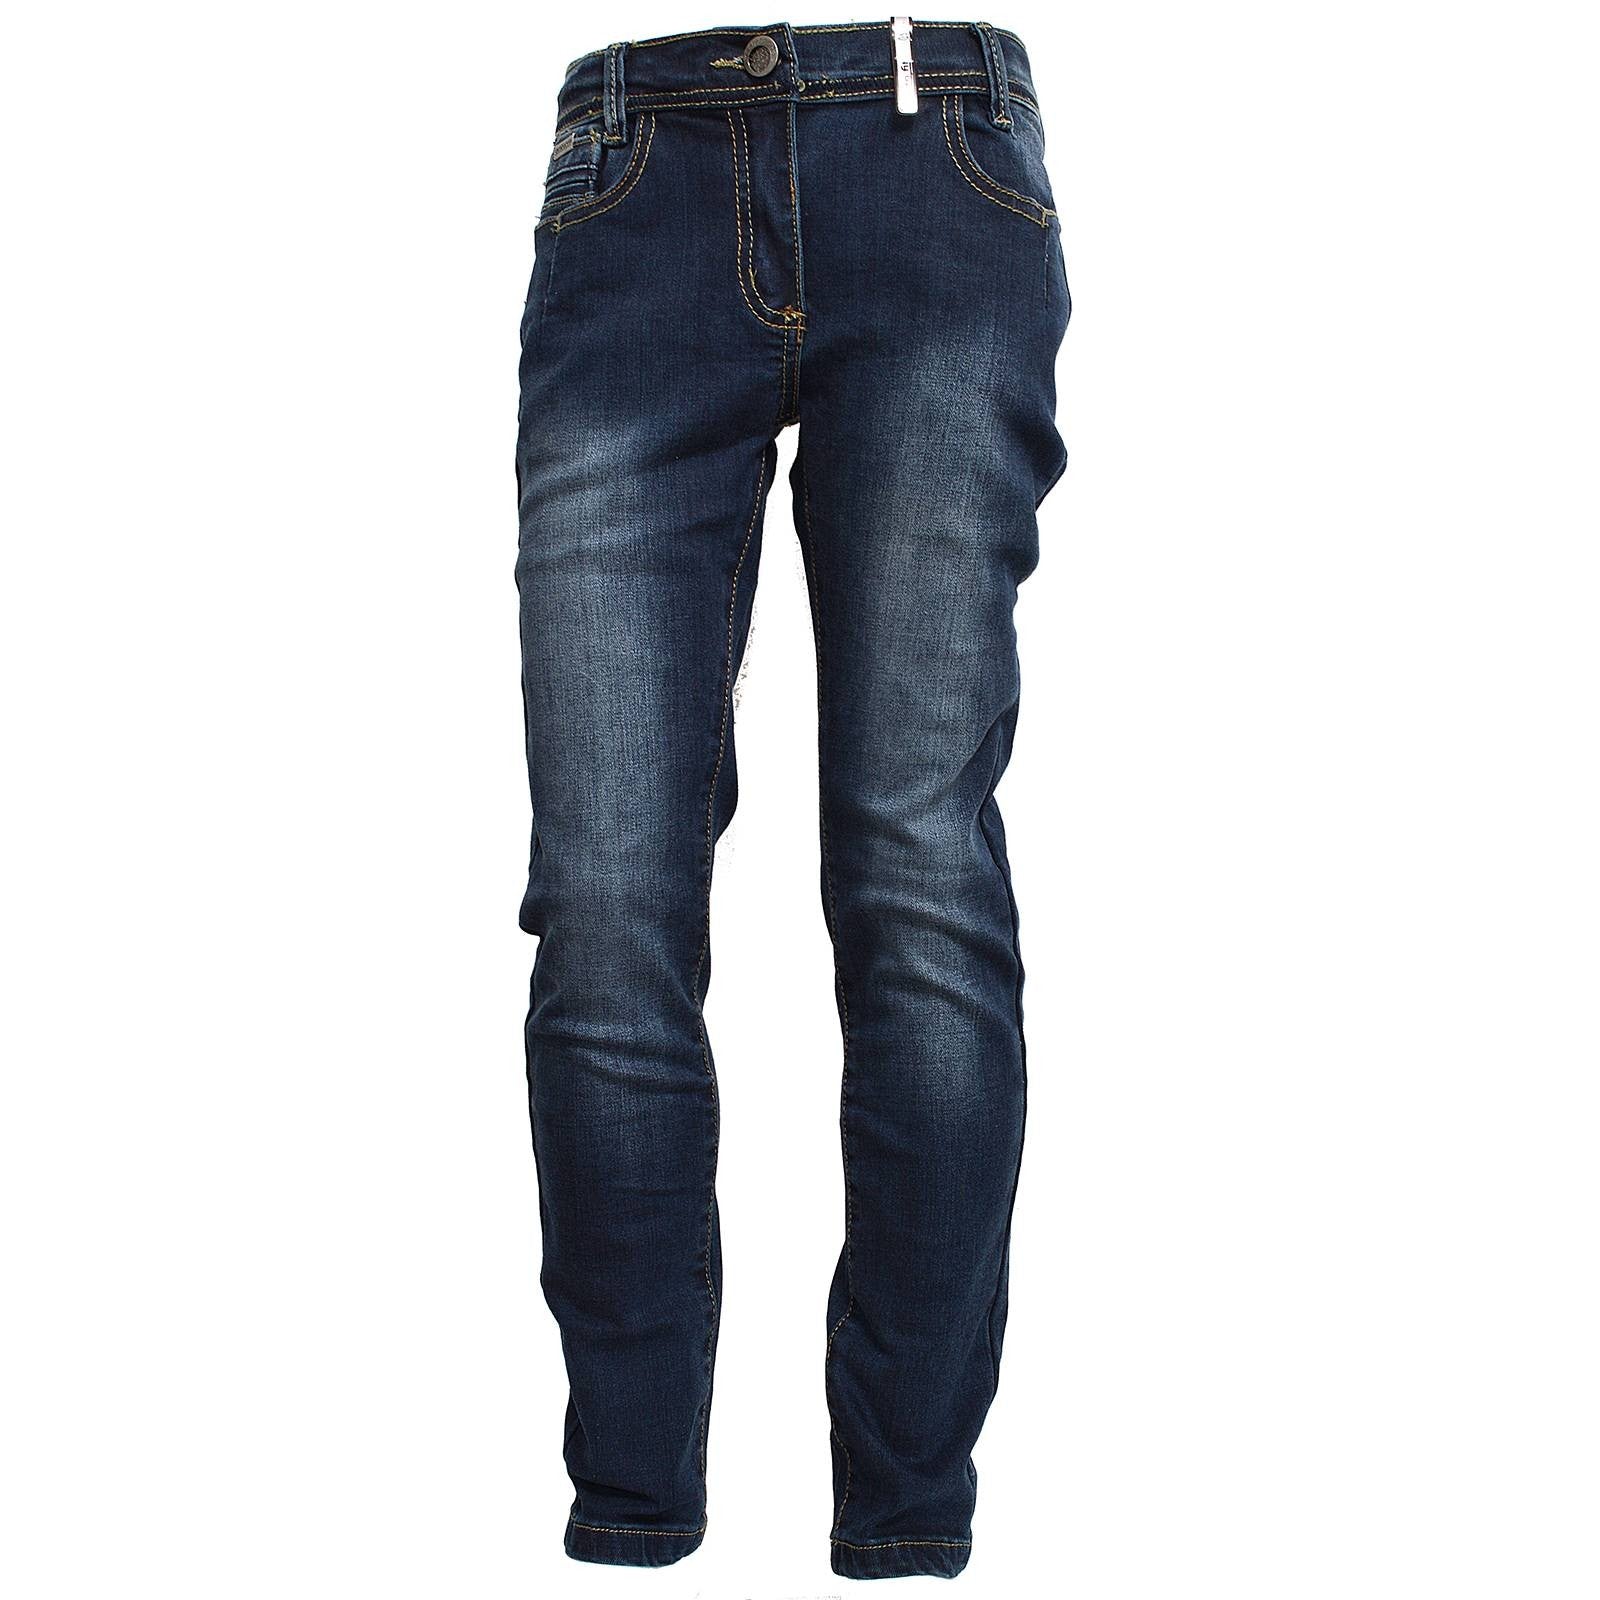 Jeans Slim Fit in Caldo Cotone Denim Bambina Sarabanda F442 - SARABANDA - LuxuryKids